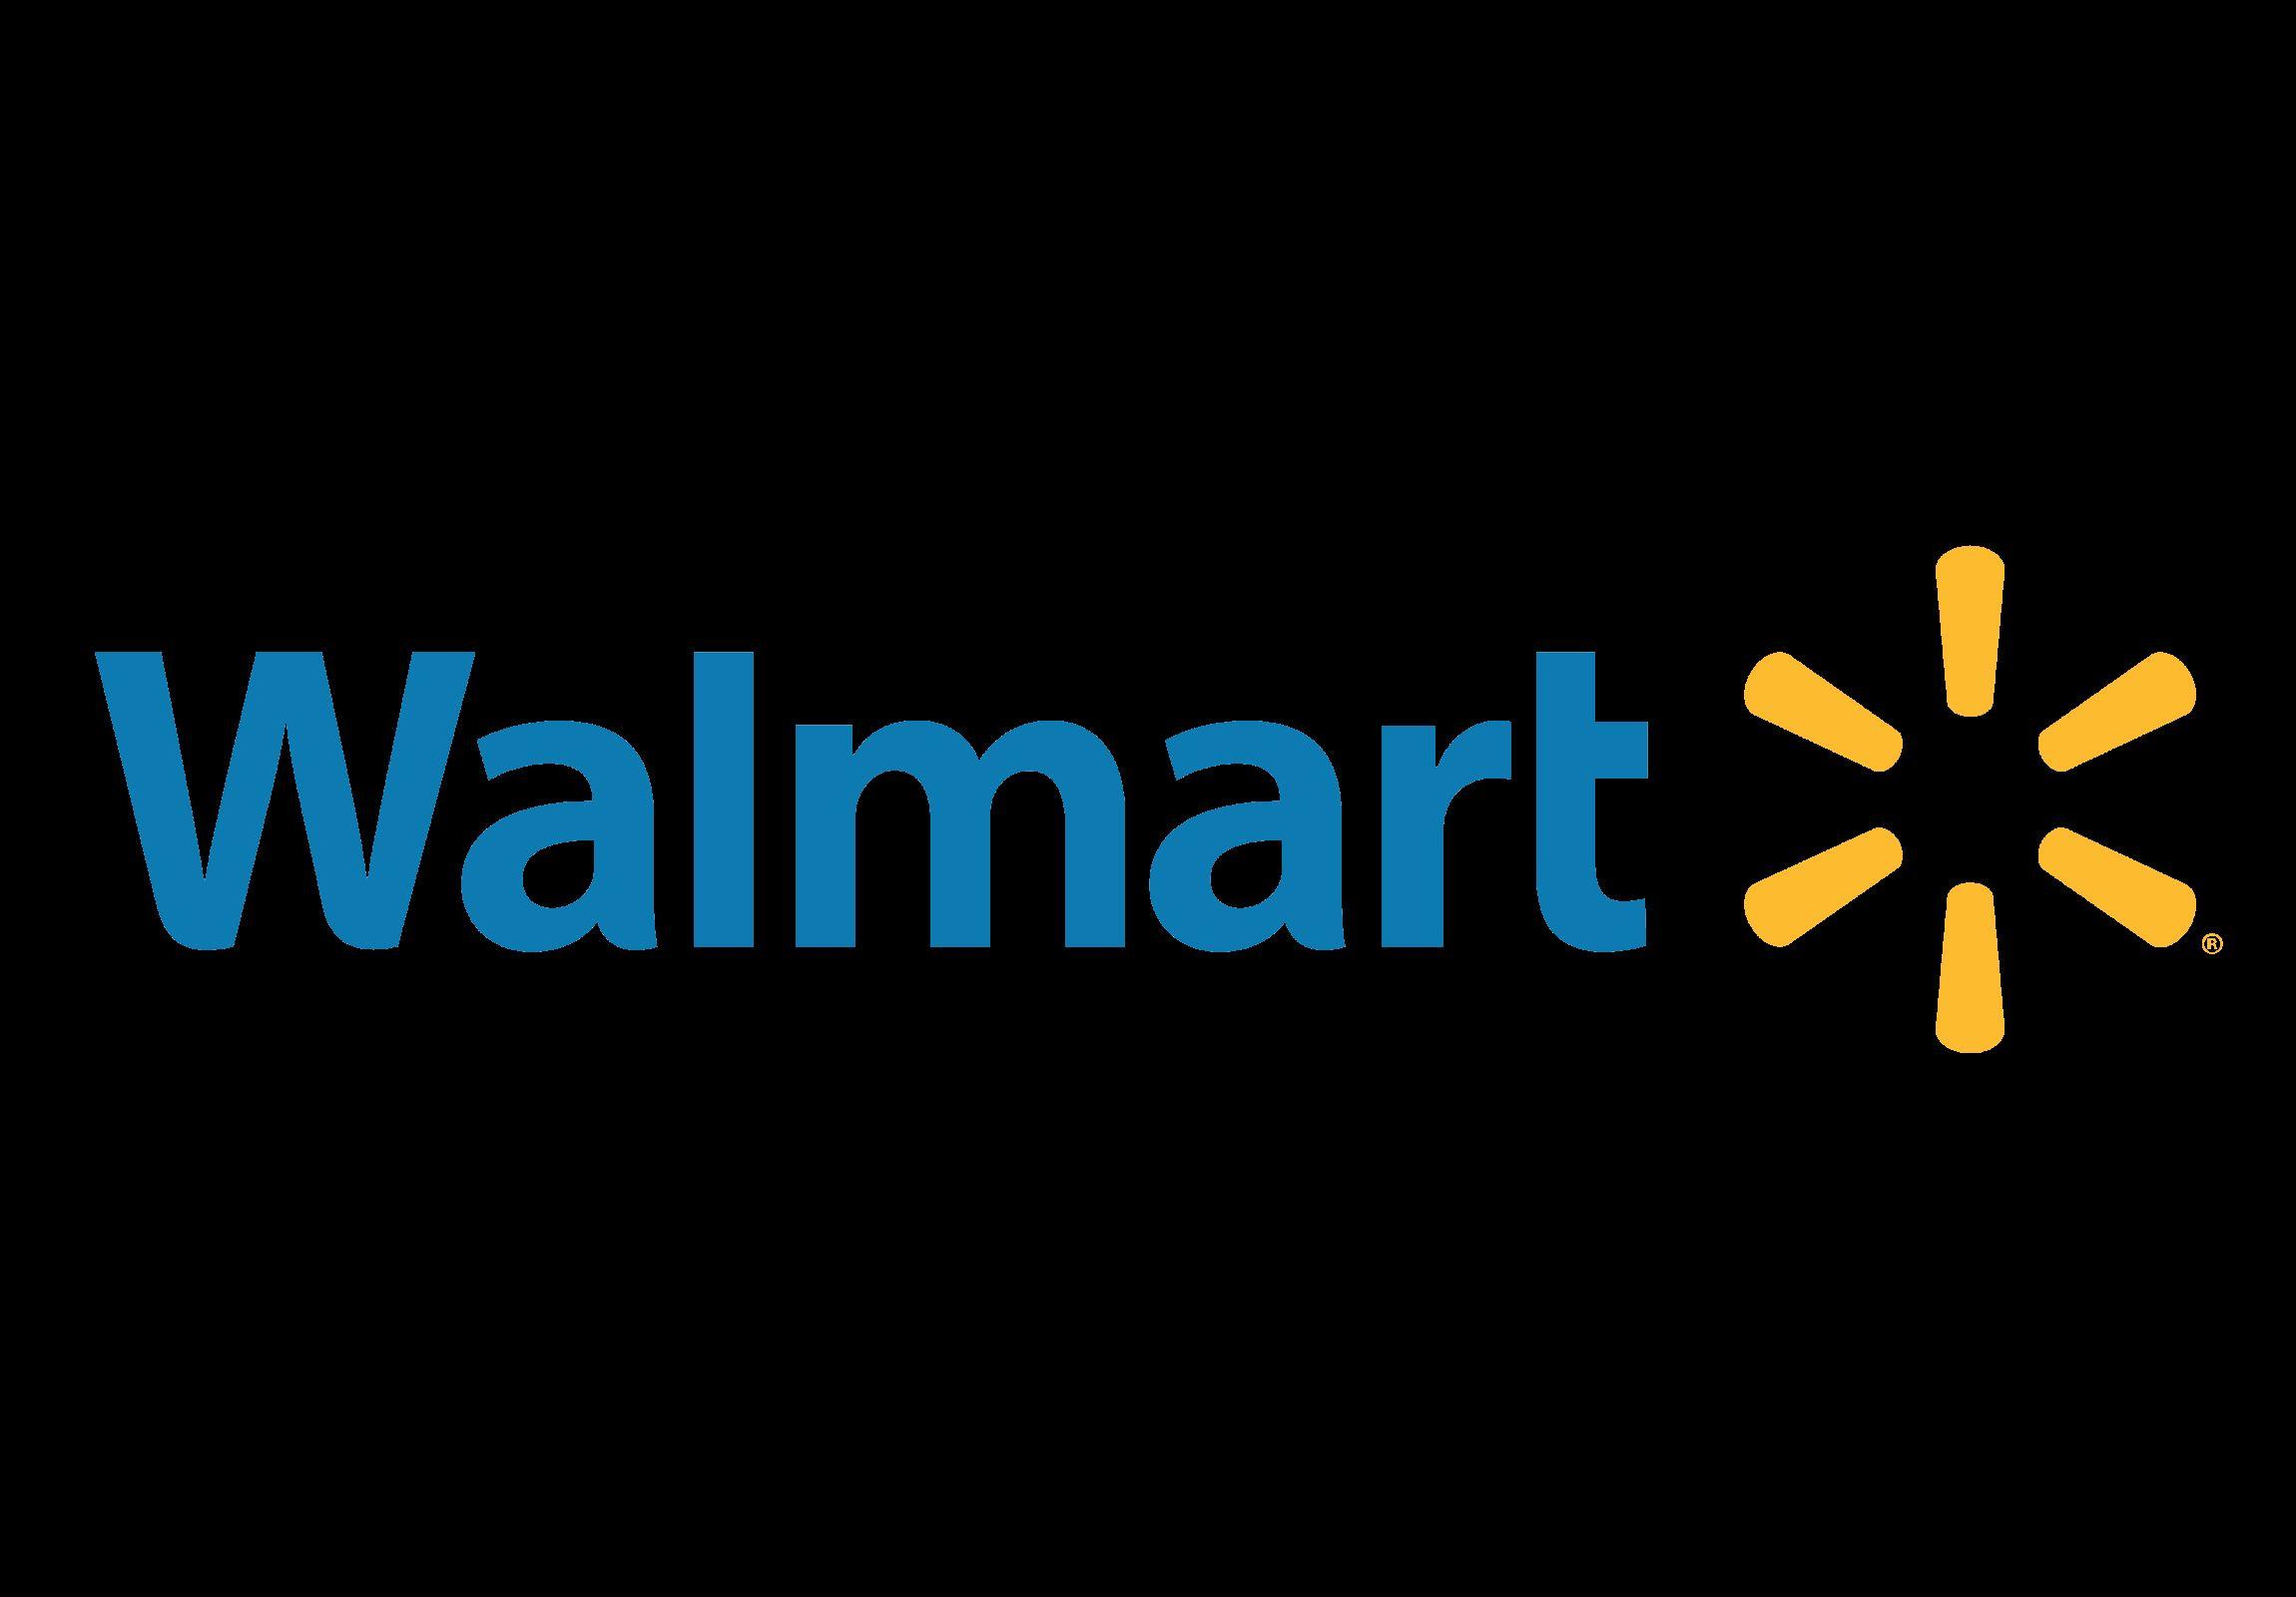 Wal Mart Company Logo - Walmart Logo, Walmart Symbol, History and Evolution